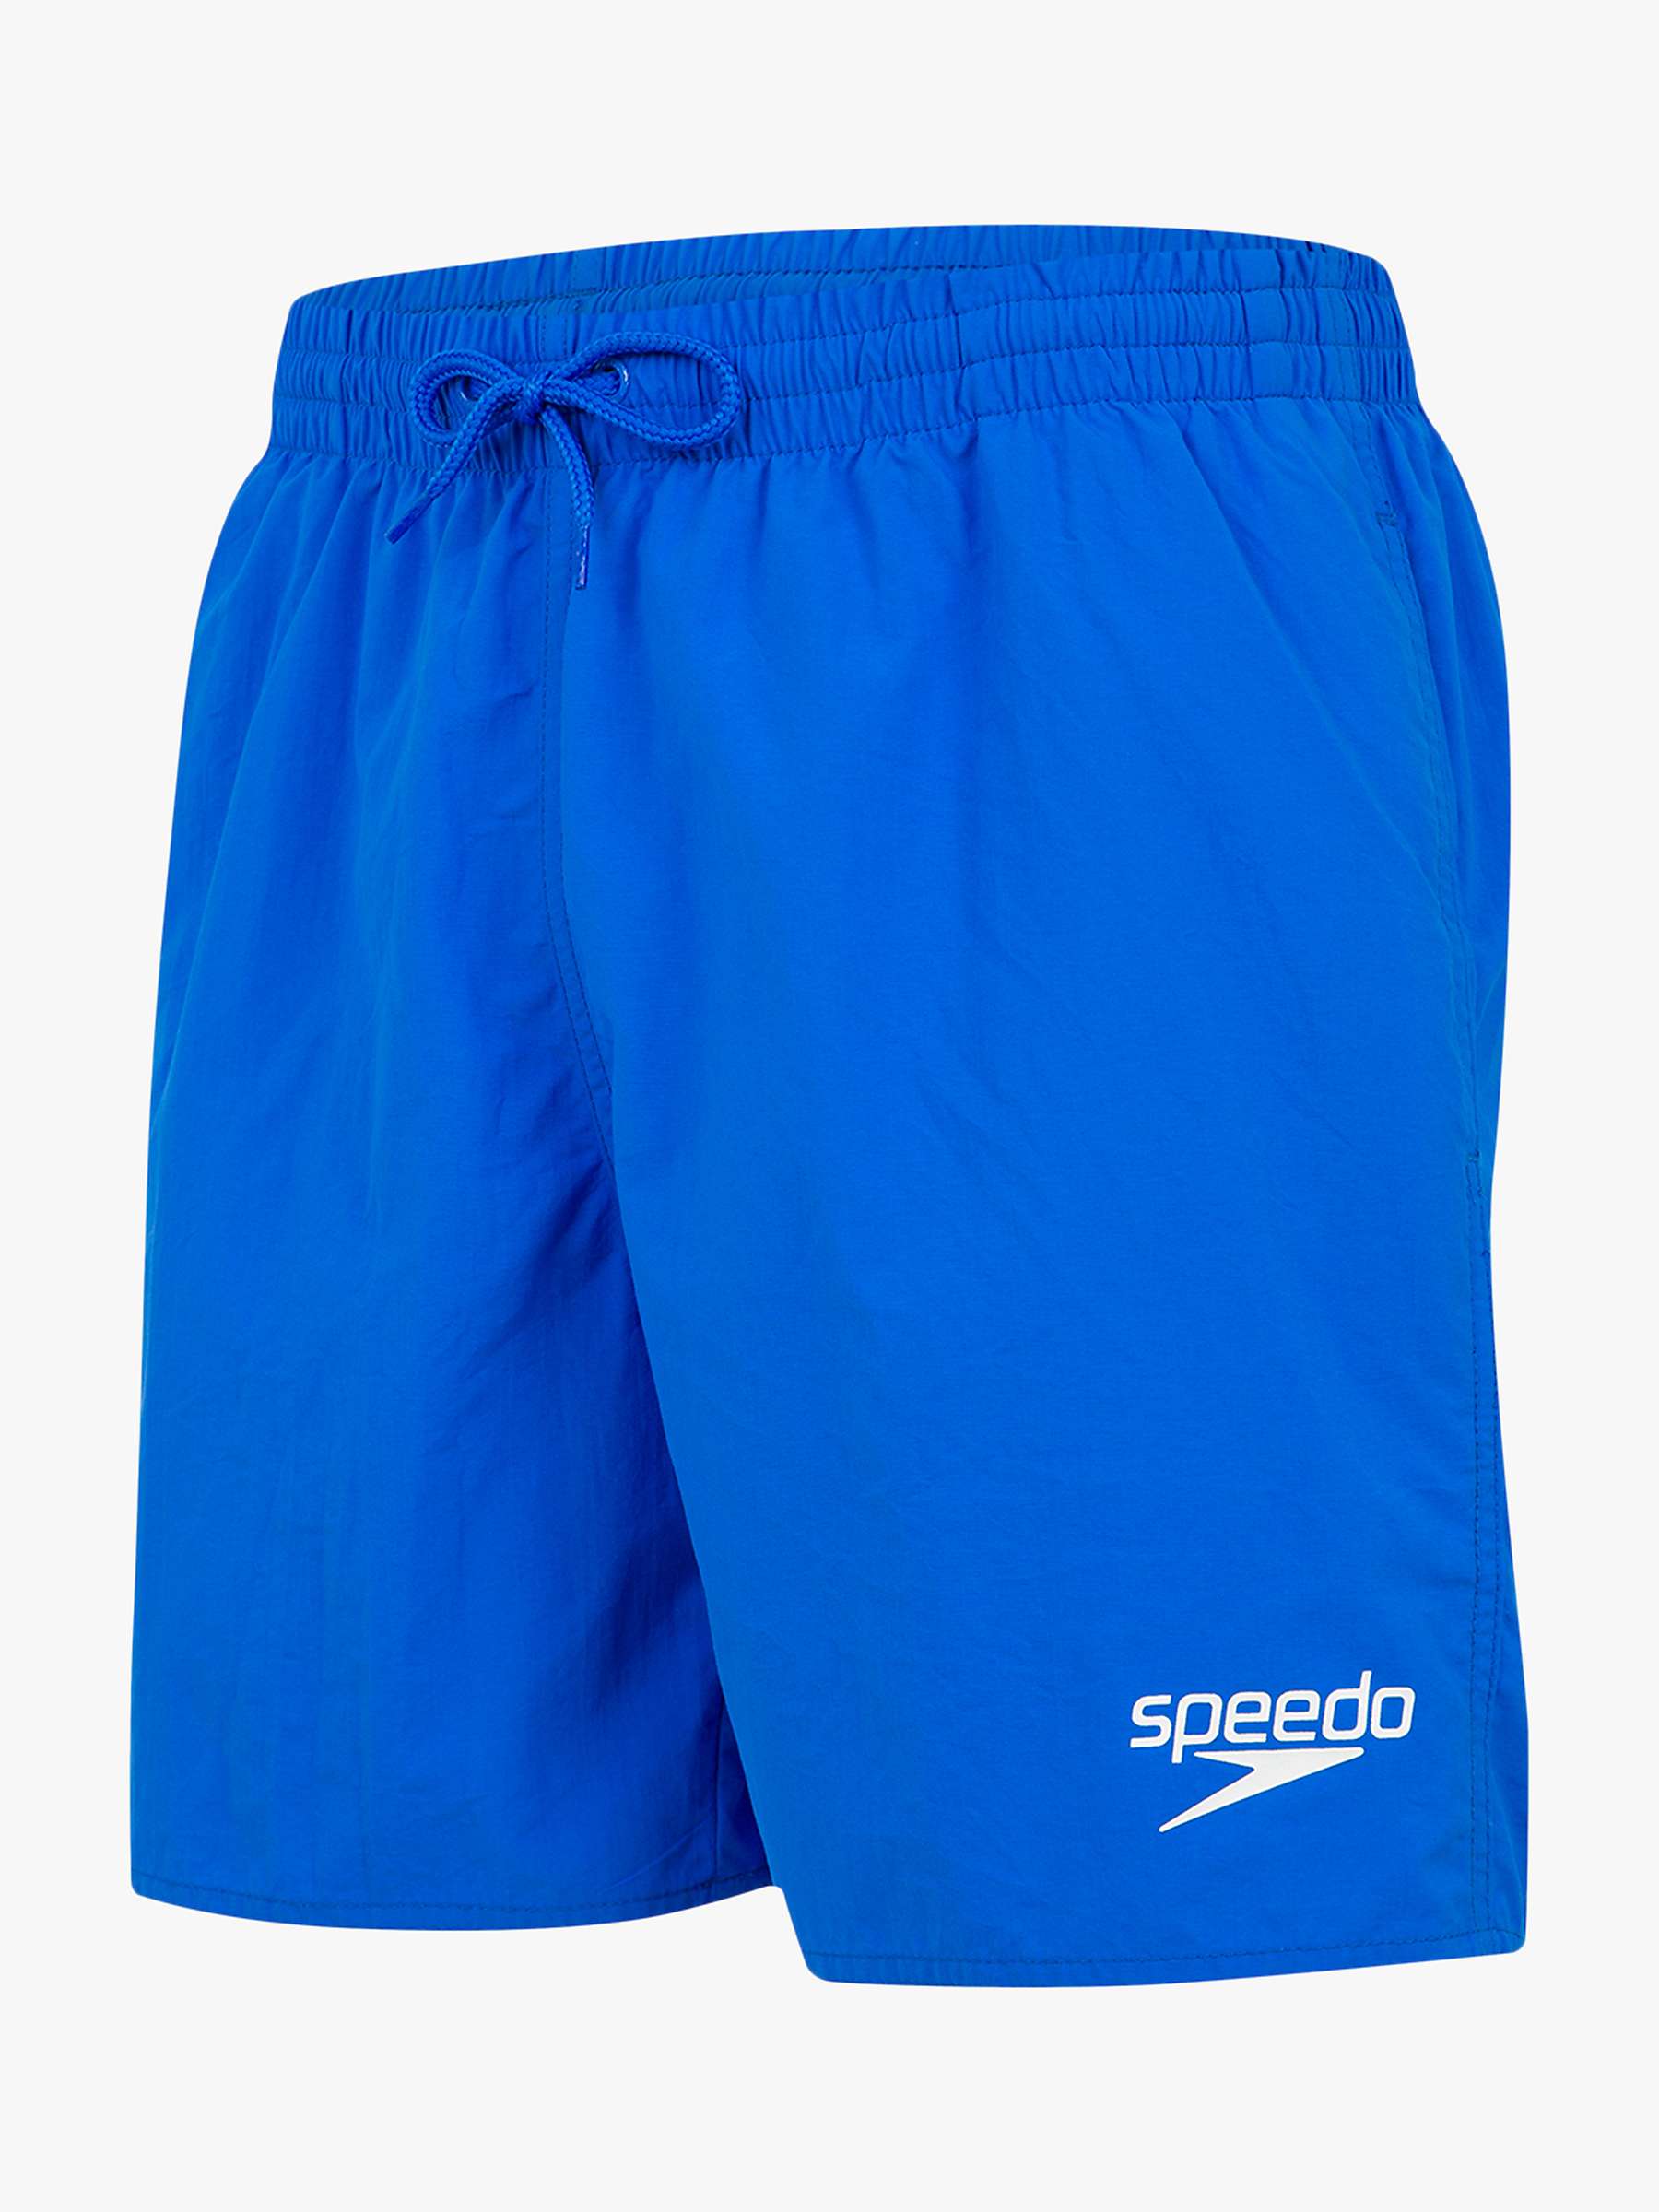 Buy Speedo Essentials 16" Swim Shorts, Biondi Blue Online at johnlewis.com